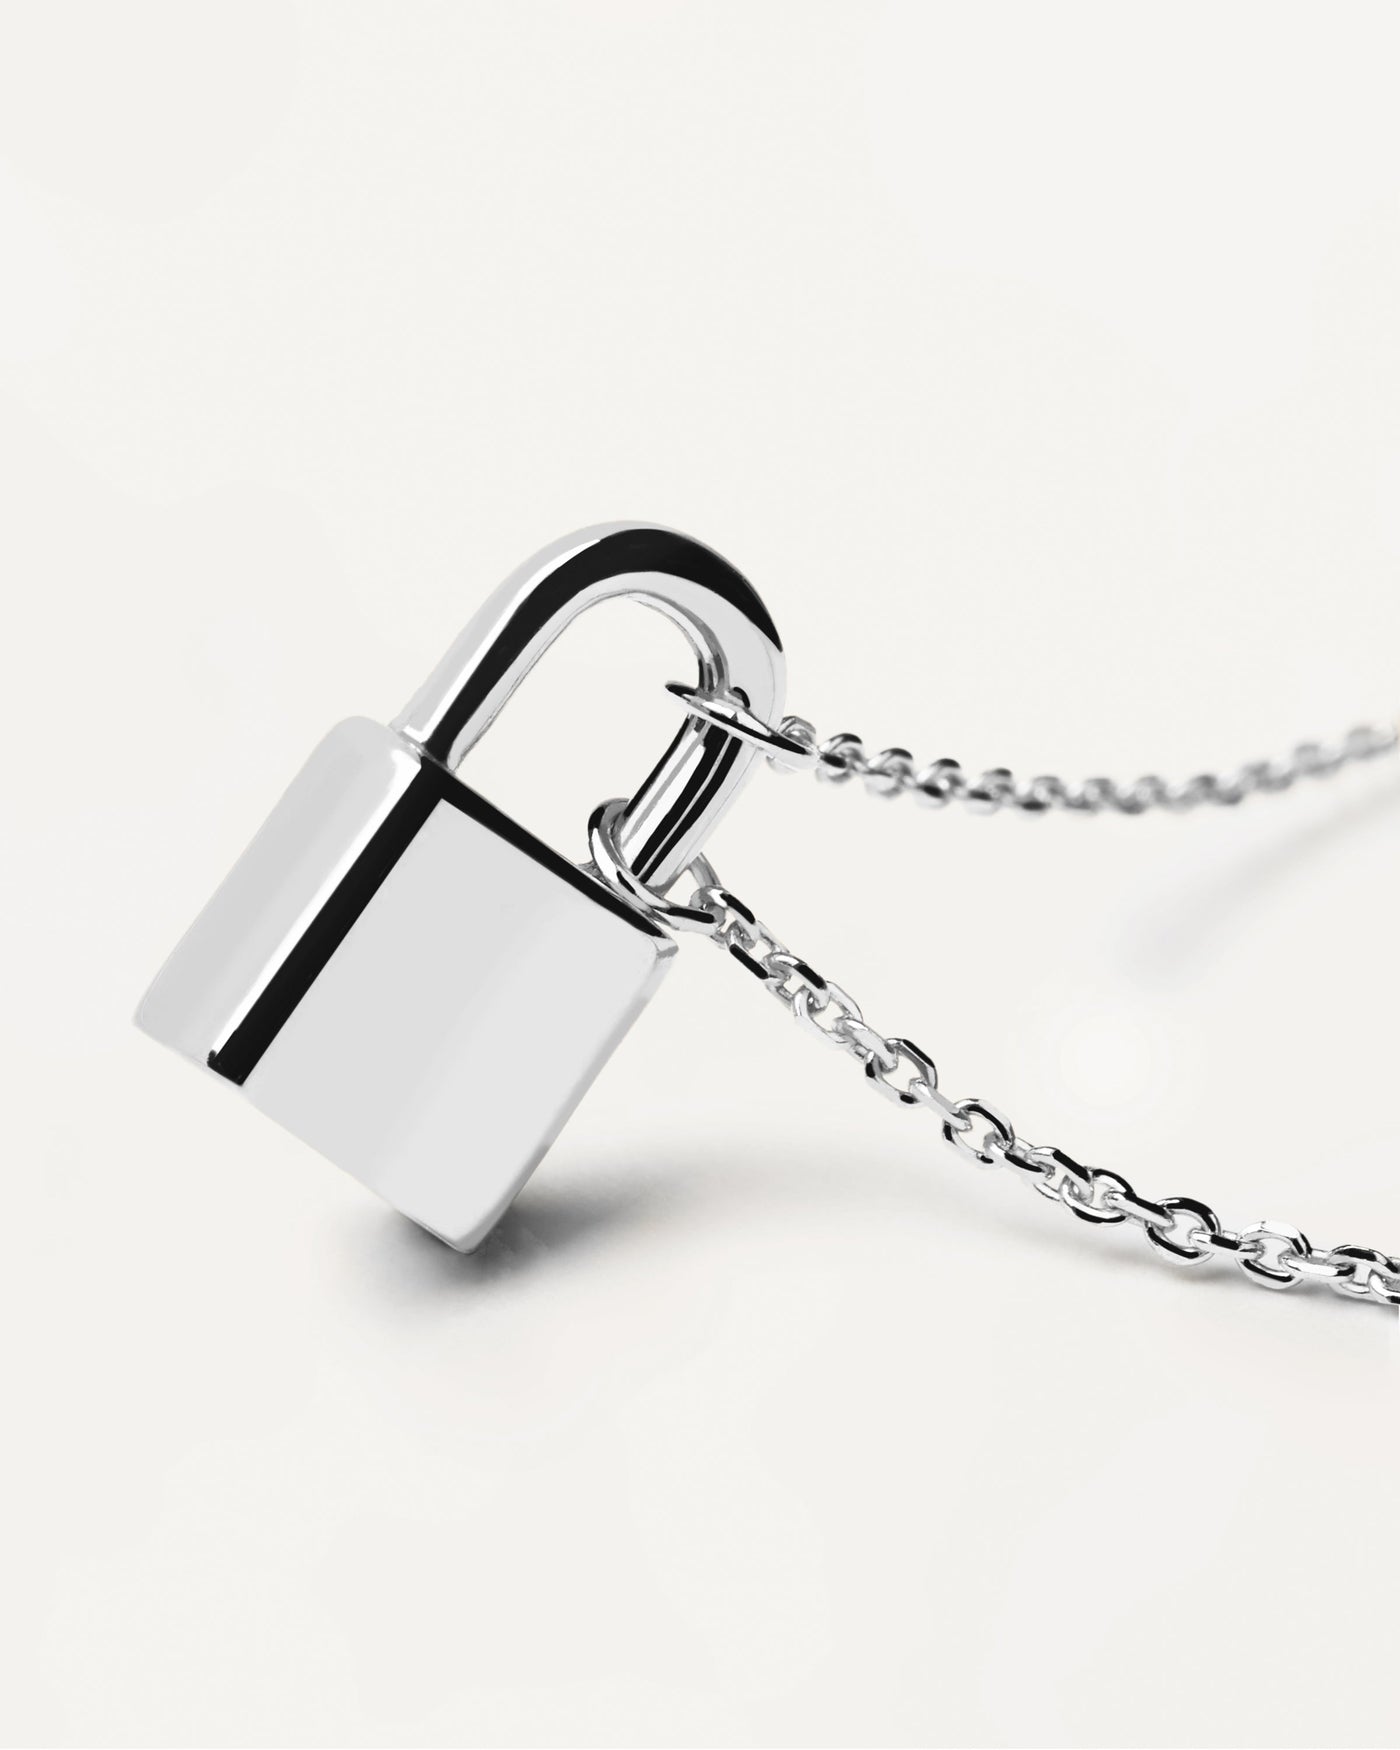 Silver Chain Lock Pendant, Chain Necklace Padlock Pendant